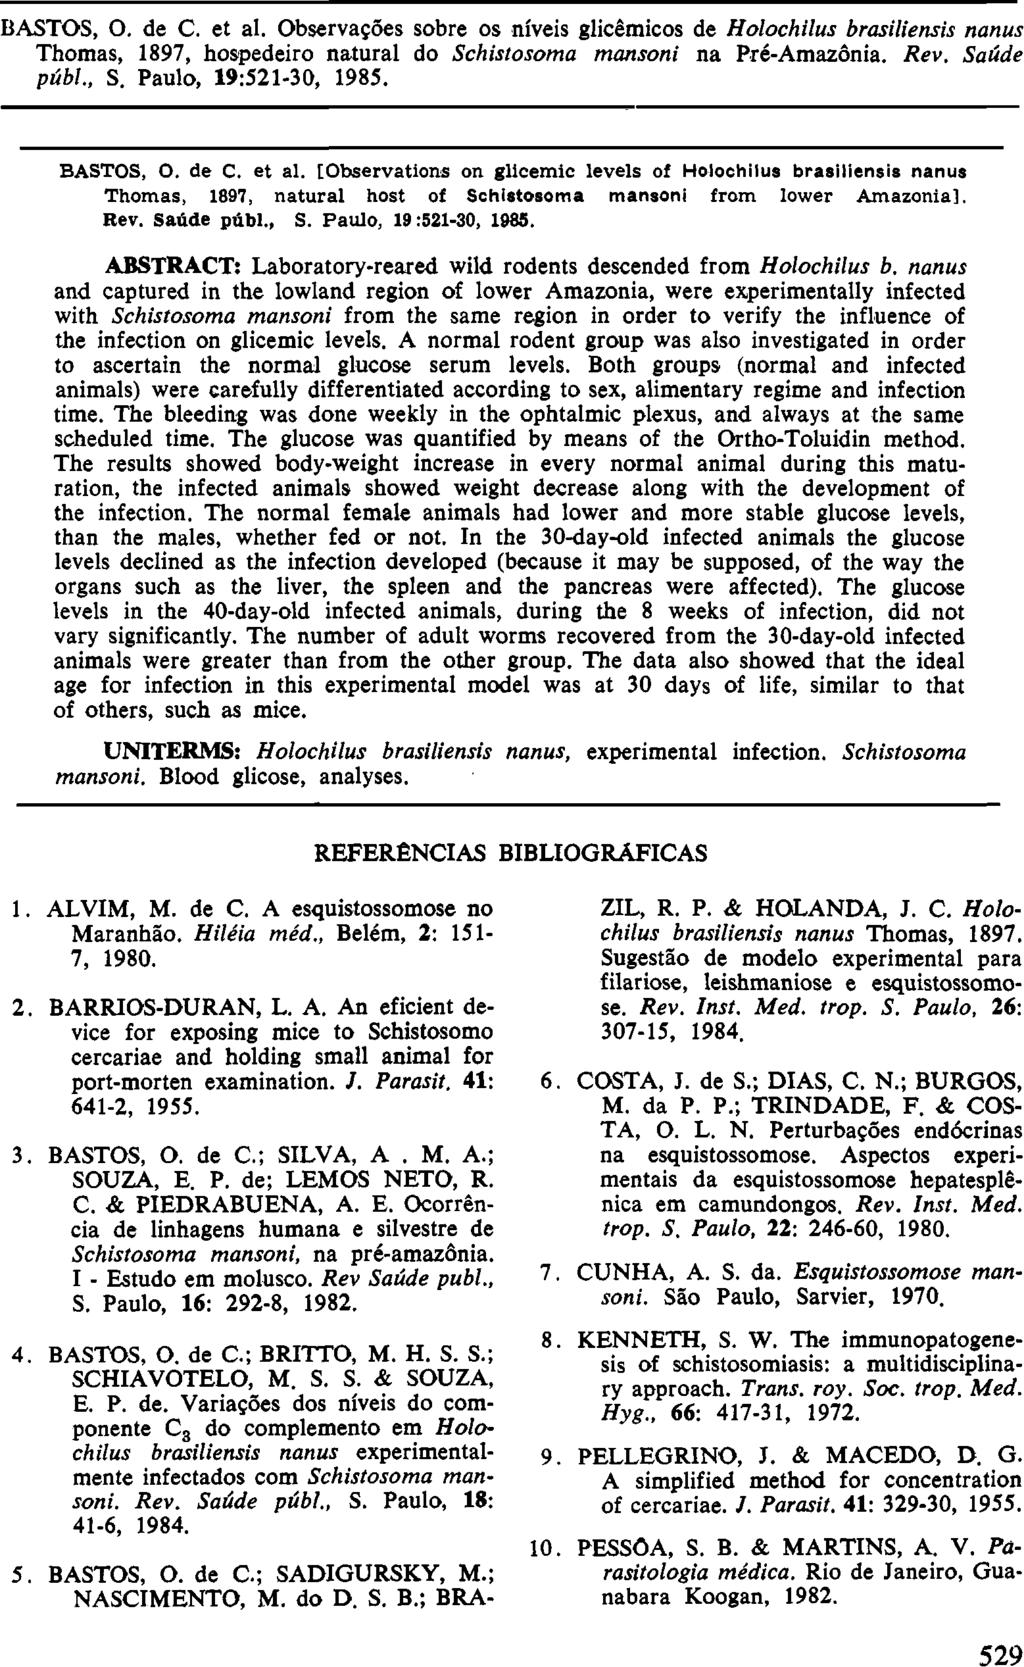 BASTOS, O. de C. et al. [Observations on glicemic levels of Holochilus brasiliensis nanus Thomas, 1897, natural host of Schistosoma mansoni from lower Amazonia]. Rev. Saúde públ., S.